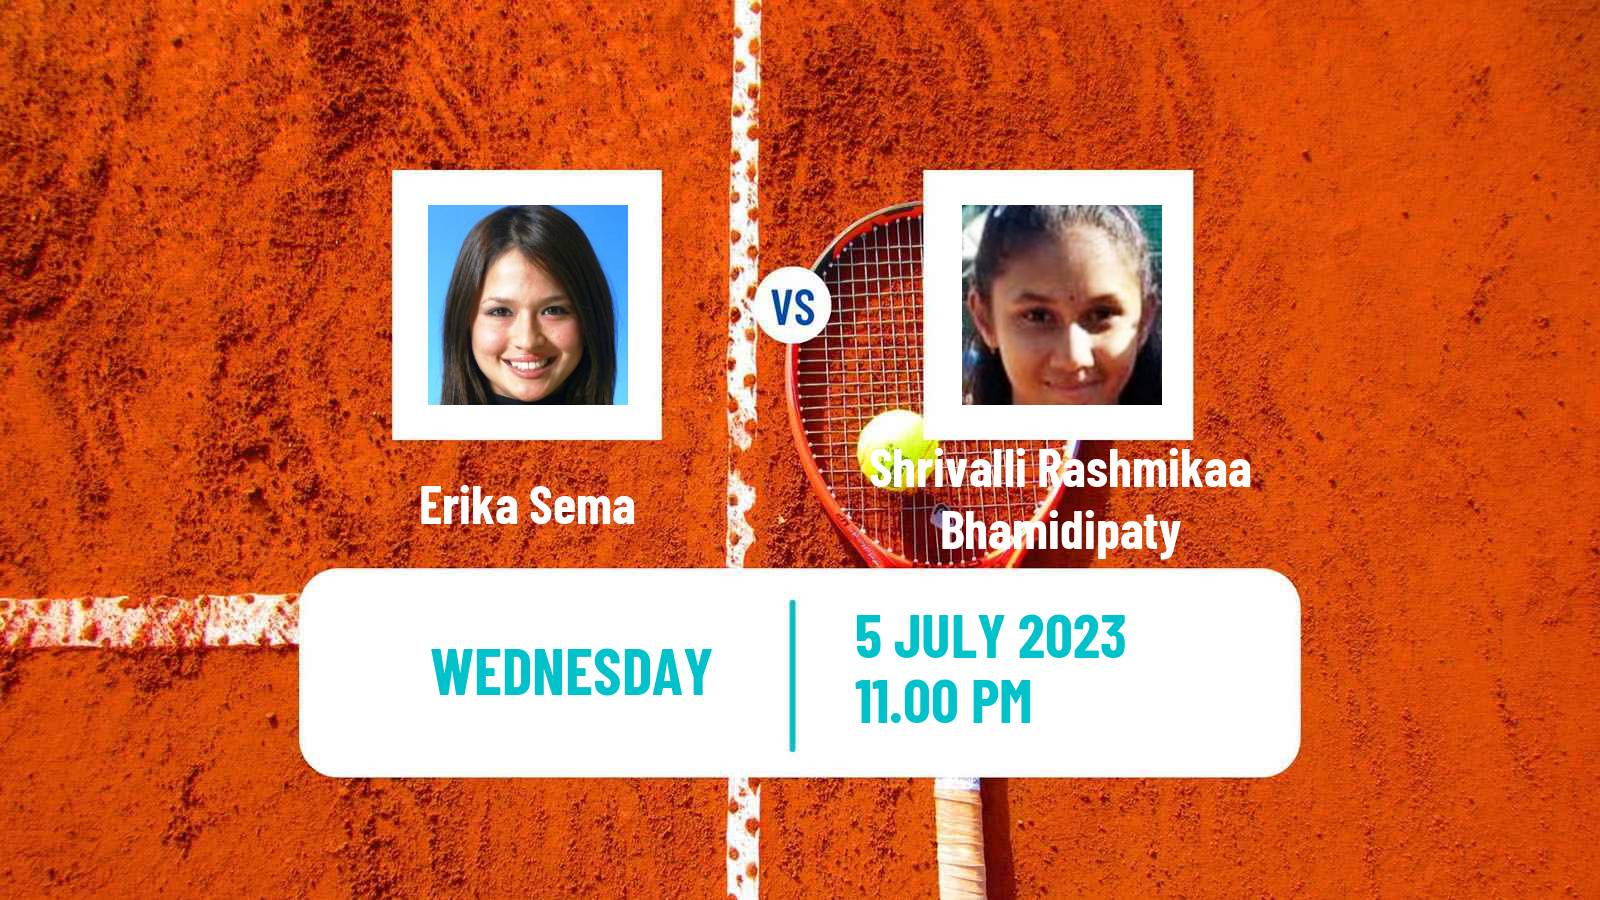 Tennis ITF W25 Nakhon Si Thammarat 2 Women Erika Sema - Shrivalli Rashmikaa Bhamidipaty